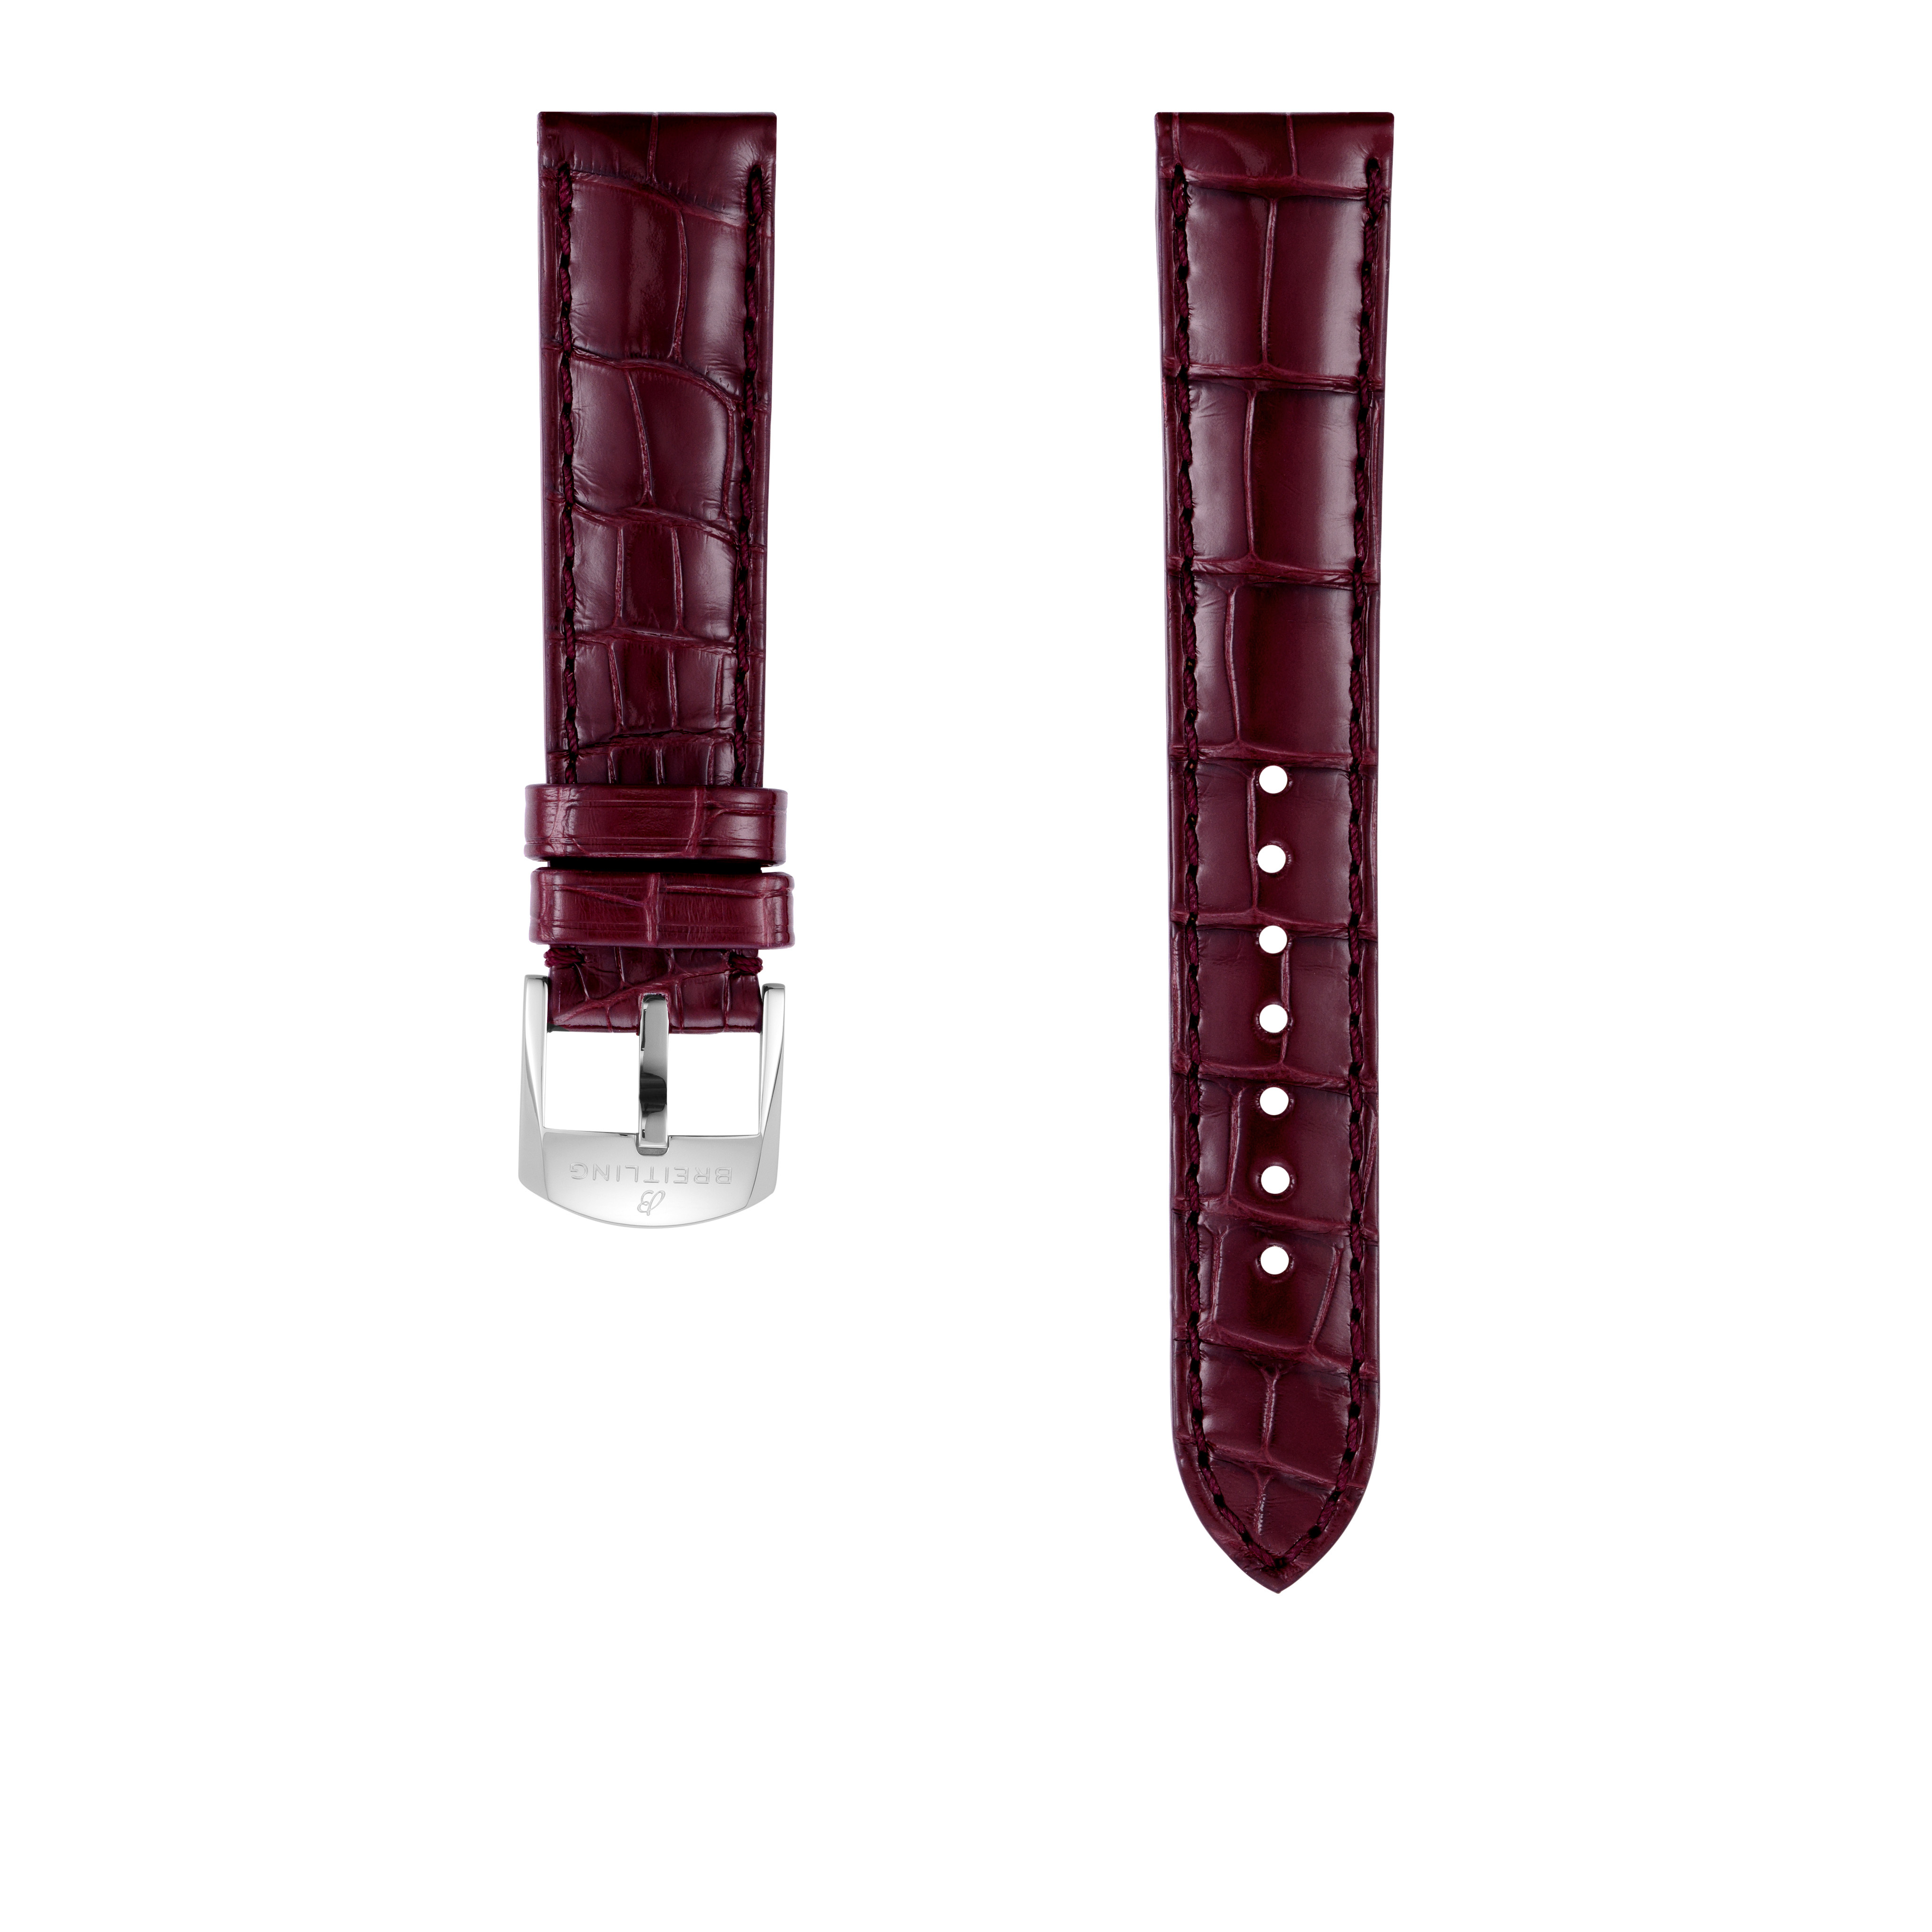 Burgundy alligator leather strap - 18 mm